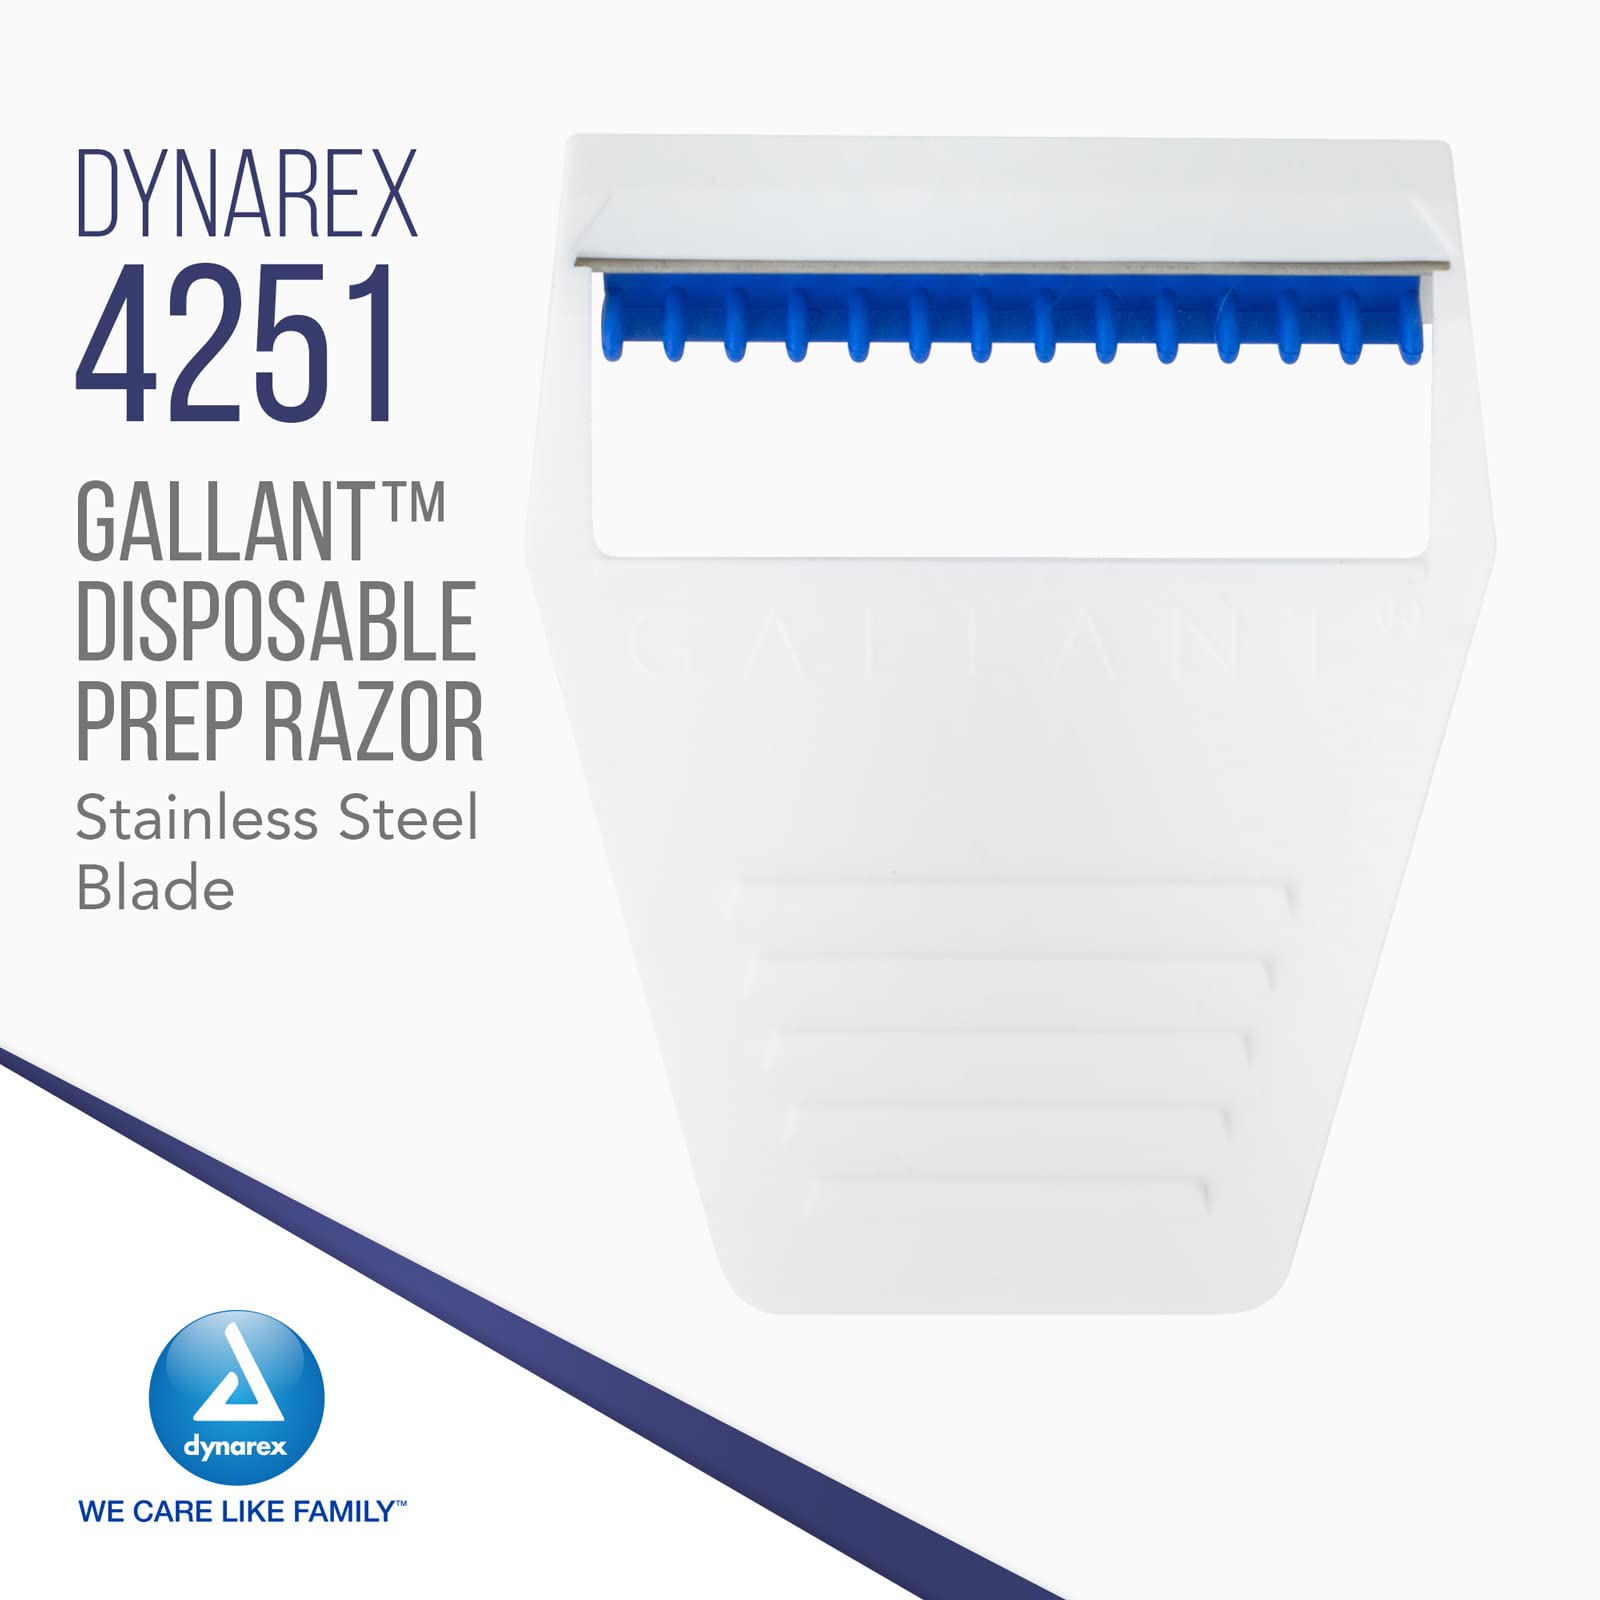 Dynarex Gallant Disposable Prep Razors, Disposable Razors with Open Design, Ergonomic Surgical Prep Razors, 1 Case of 250 Razors (5 Boxes of 50)